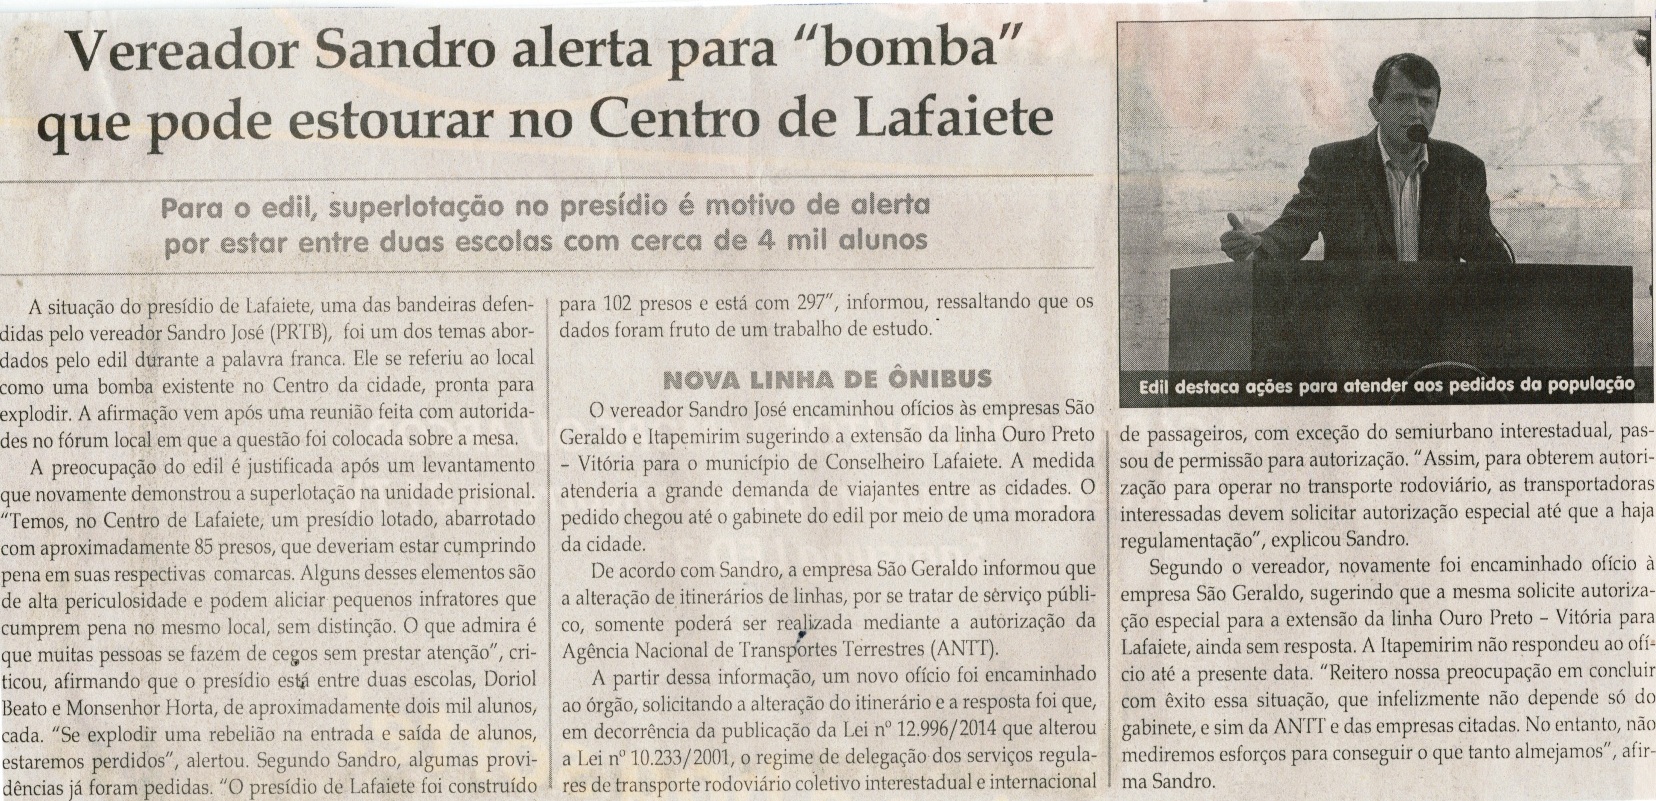 Vereador Sandro alerta para "bomba" que pode estourar no Centro de Lafaiete. Jornal Correio da Cidade, Conselheiro Lafaiete, 12 set. 2015, 1282ª ed., p. 6